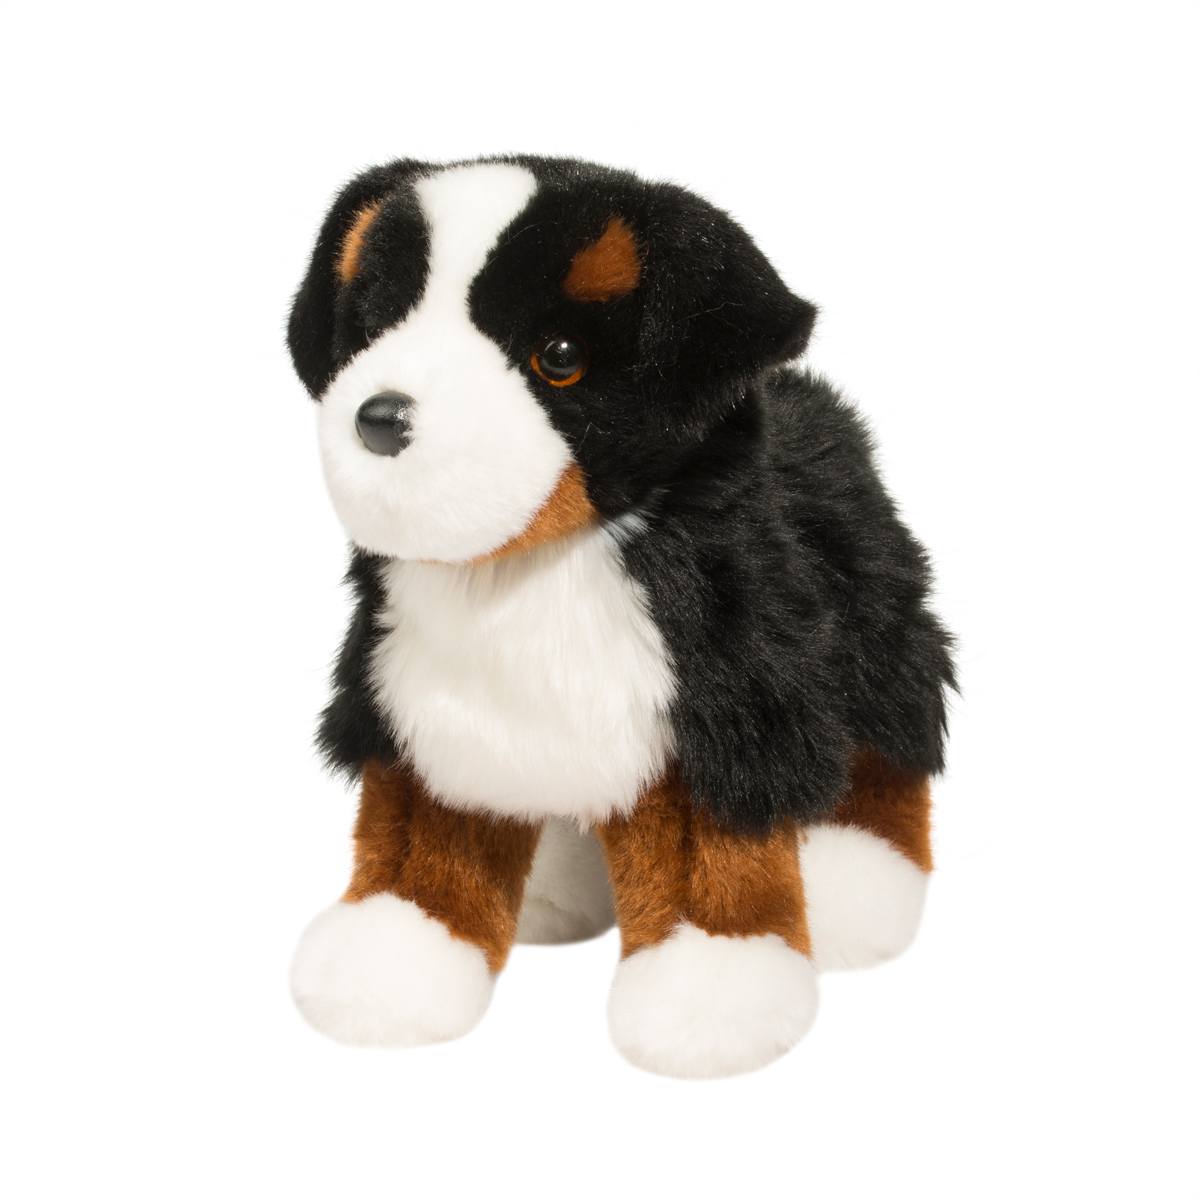 Stevie Douglas 10" long plush BERNESE MOUNTAIN DOG stuffed animal cuddle toy 